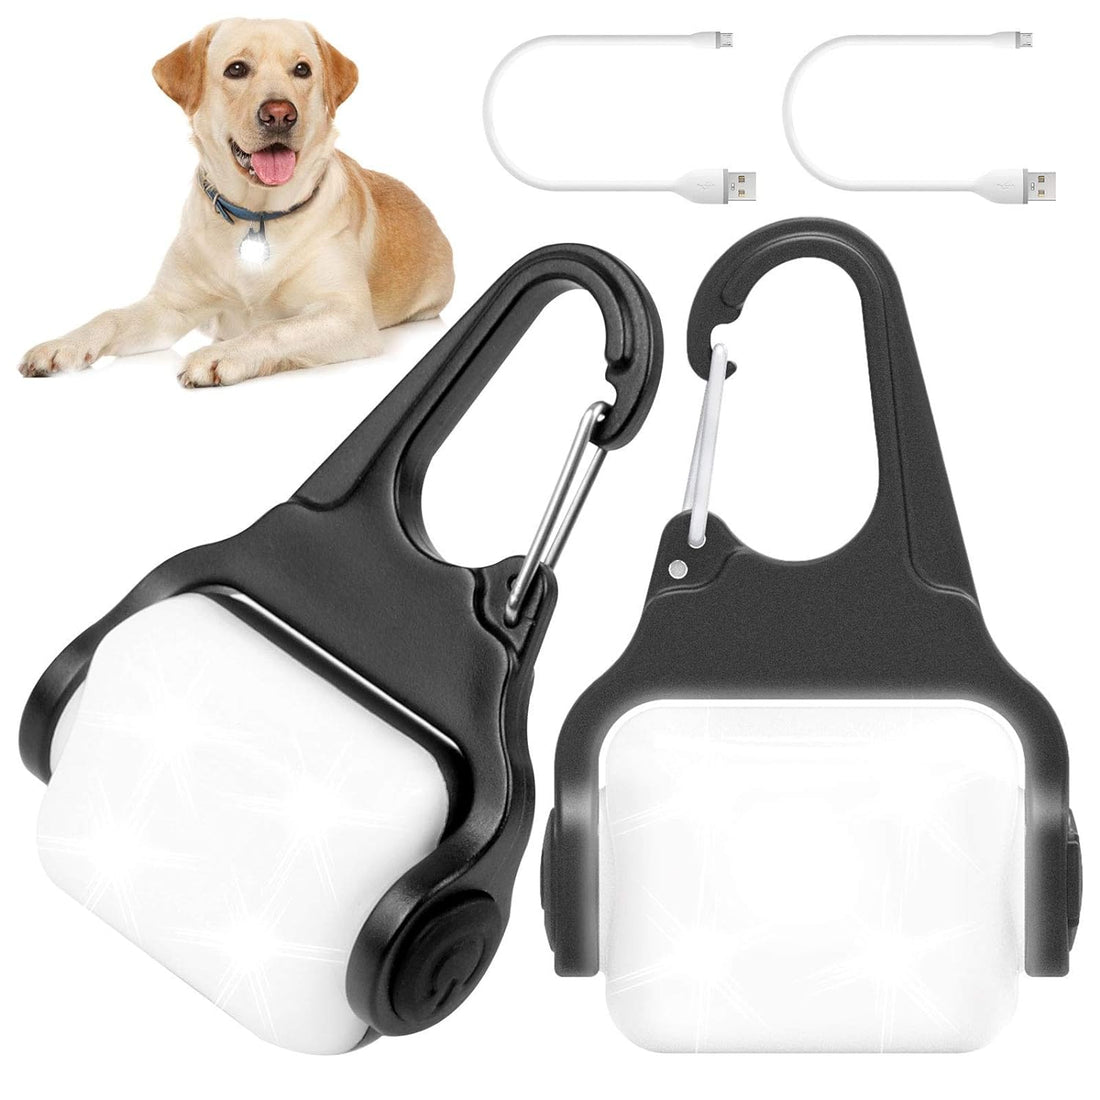 Dog Lights for Night Walking, Clip on USB Rechargeable Dog Collar Light, 3 Light Modes Dog Light, IP65 Waterproof Dog Night Light, LED Safety Light for Running, Camping, Climbing, Bike, 3 Pack